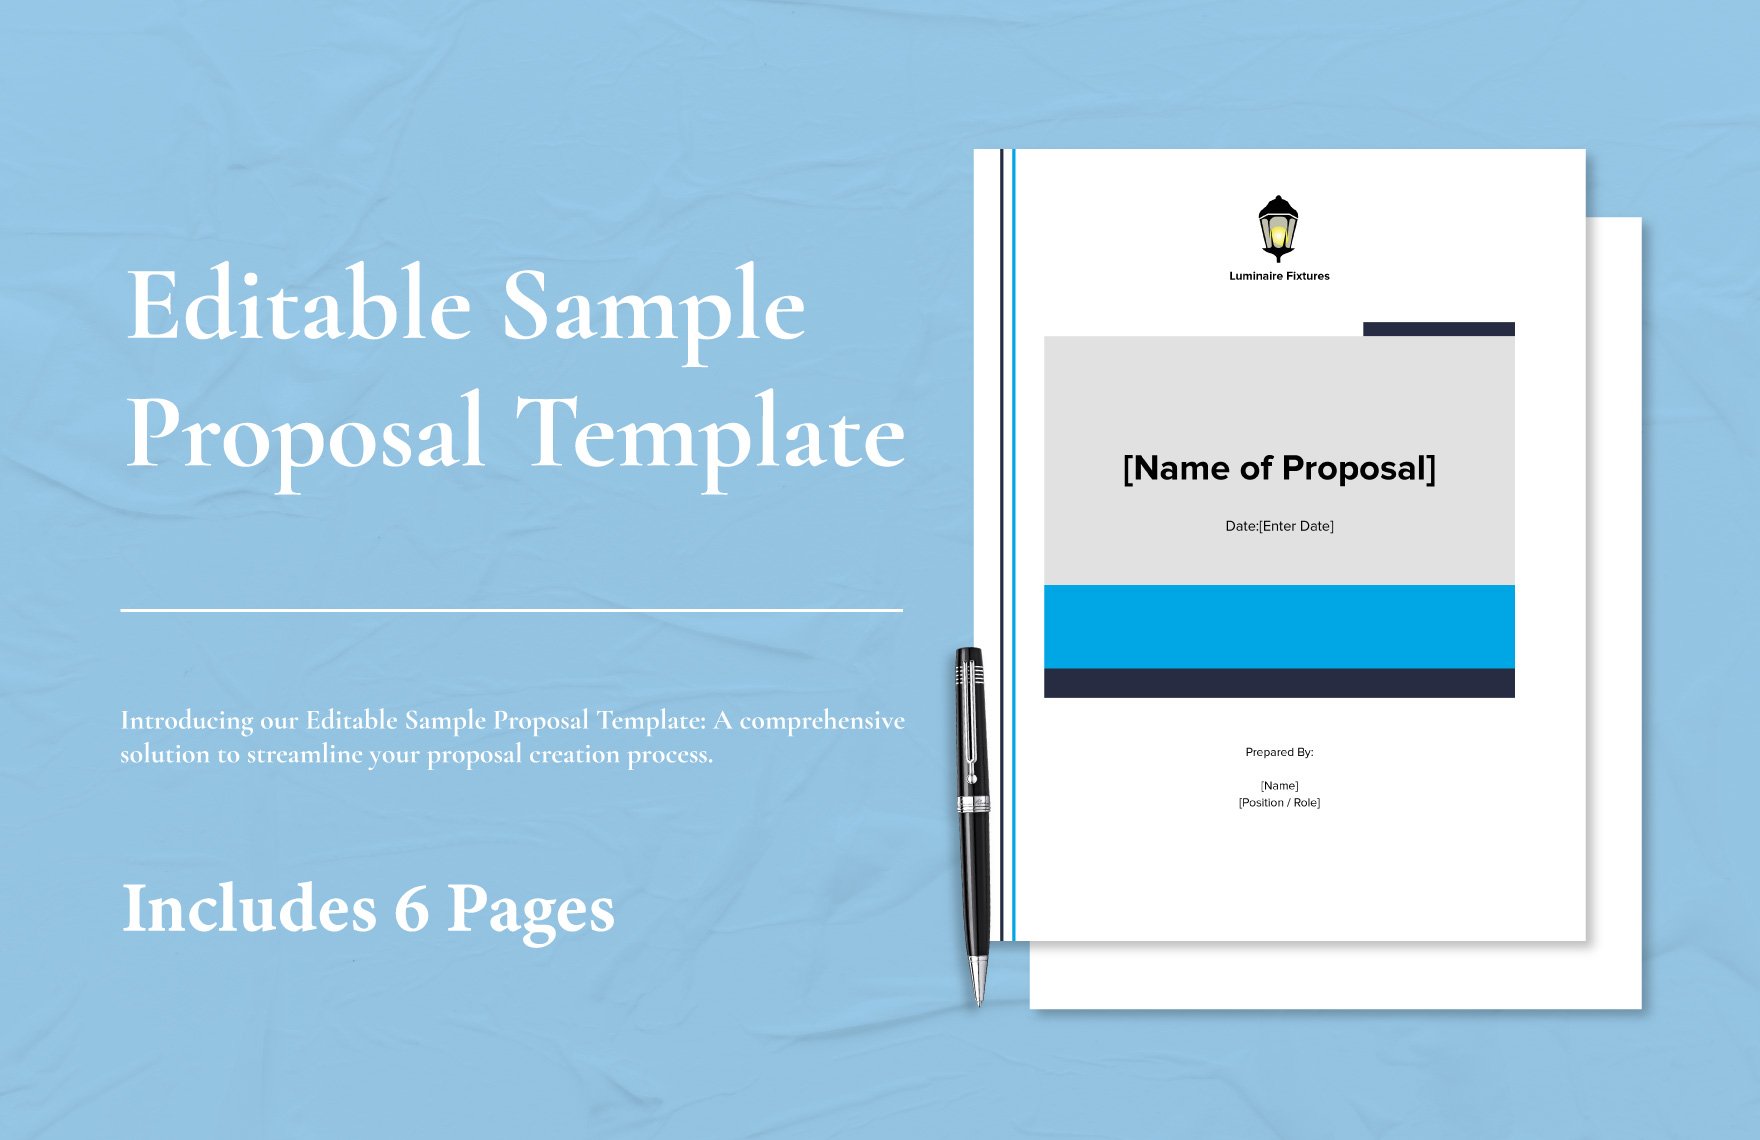 Editable Sample Proposal Template